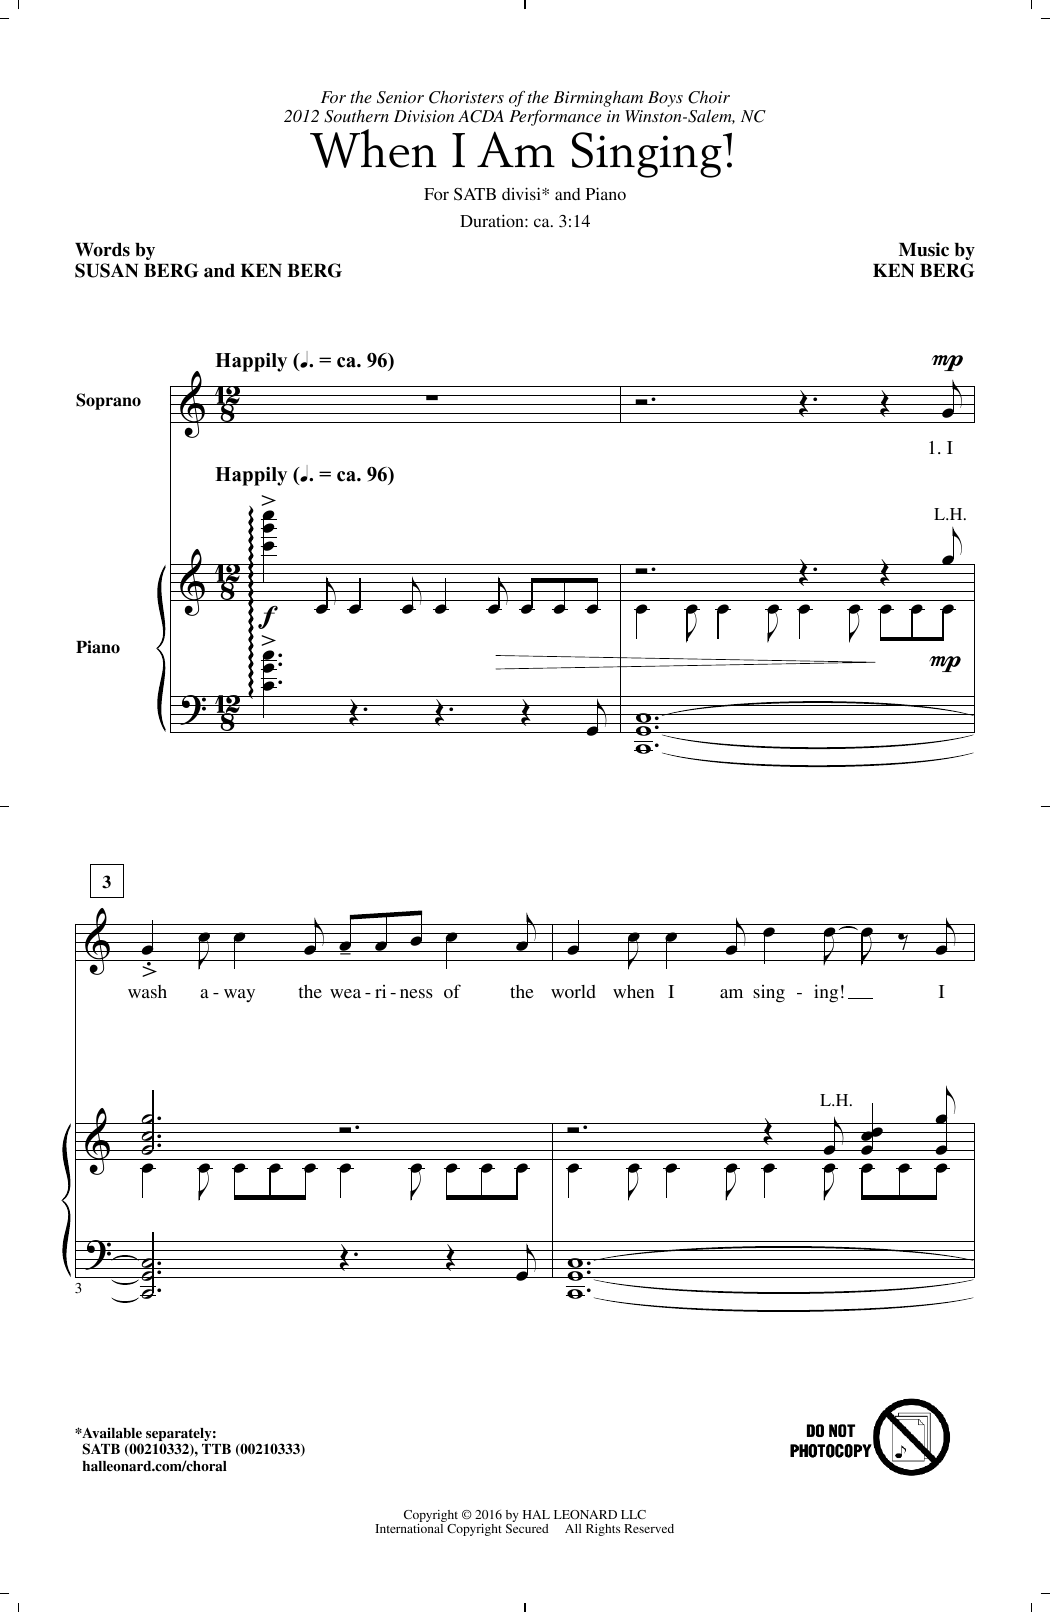 Ken Berg When I Am Singing! Sheet Music Notes & Chords for SATB - Download or Print PDF